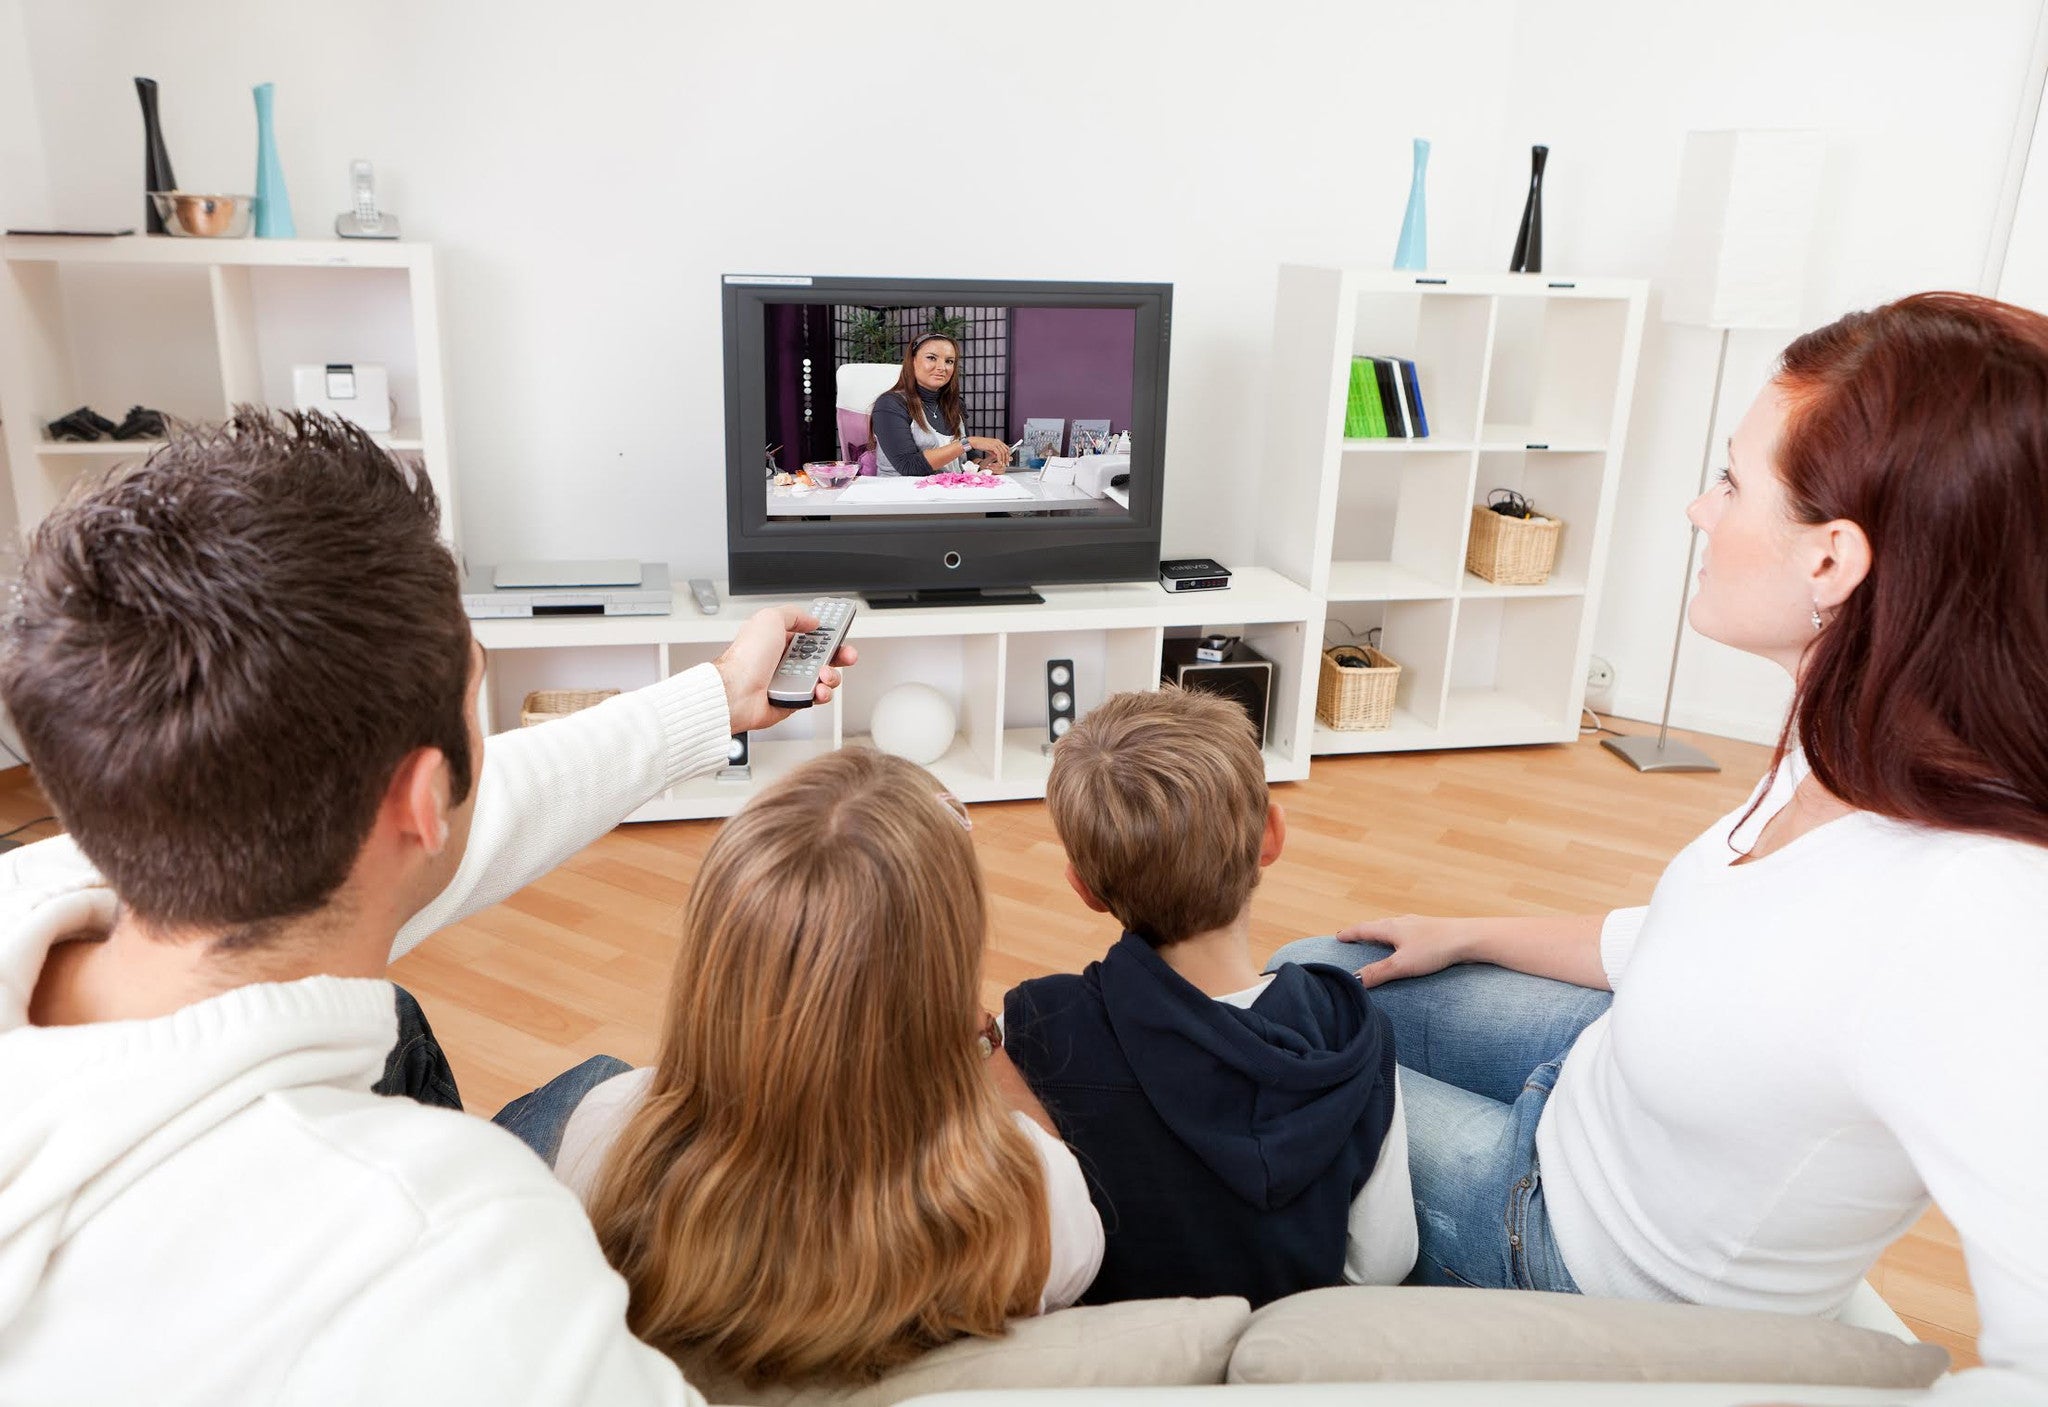 They to watch a new. Семья у телевизора. Семья смотрит телевизор. Телевизор для детей. Телевизор семейный.